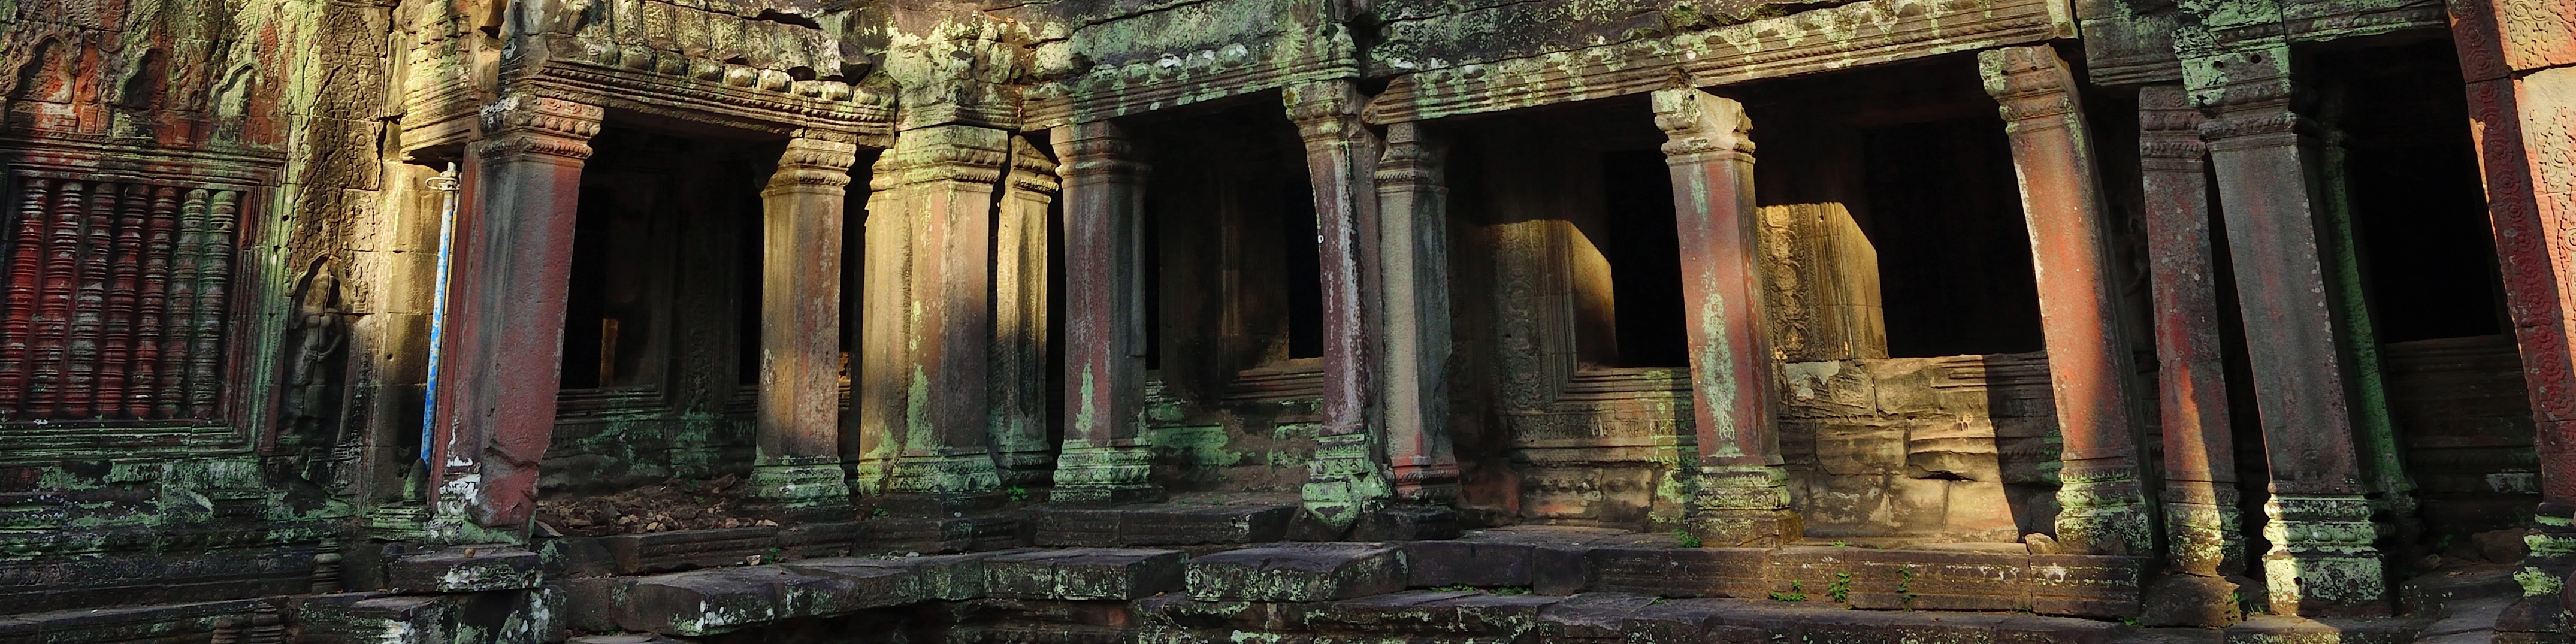 Scenic landscape of ancient temples in Cambodia